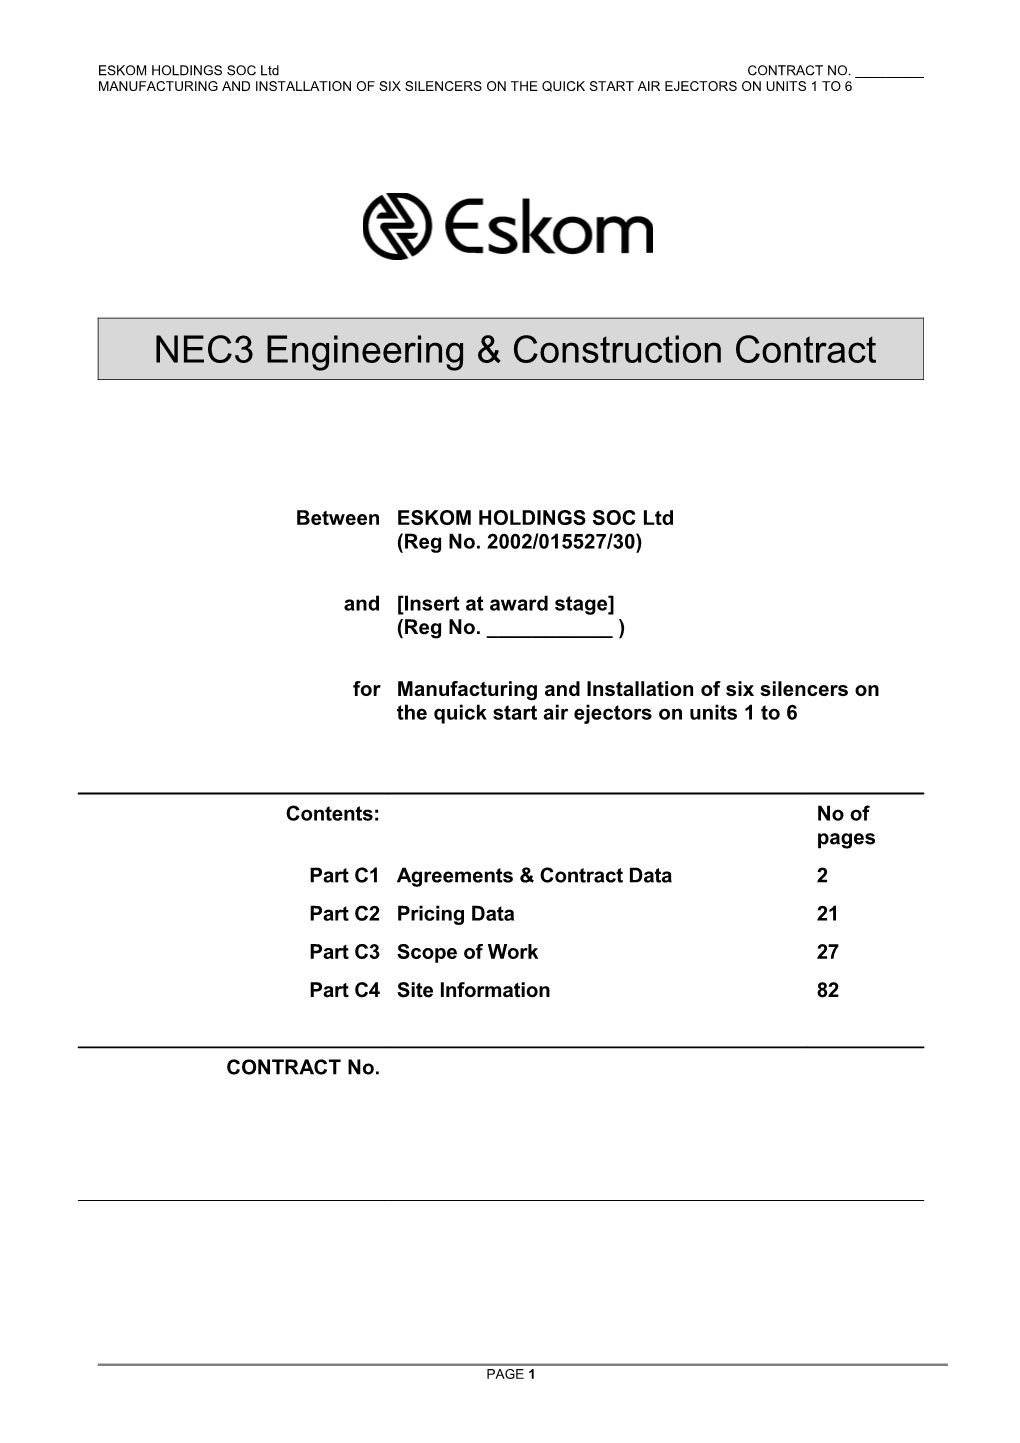 Eskom Holdings SOC Ltd Contract No. ______